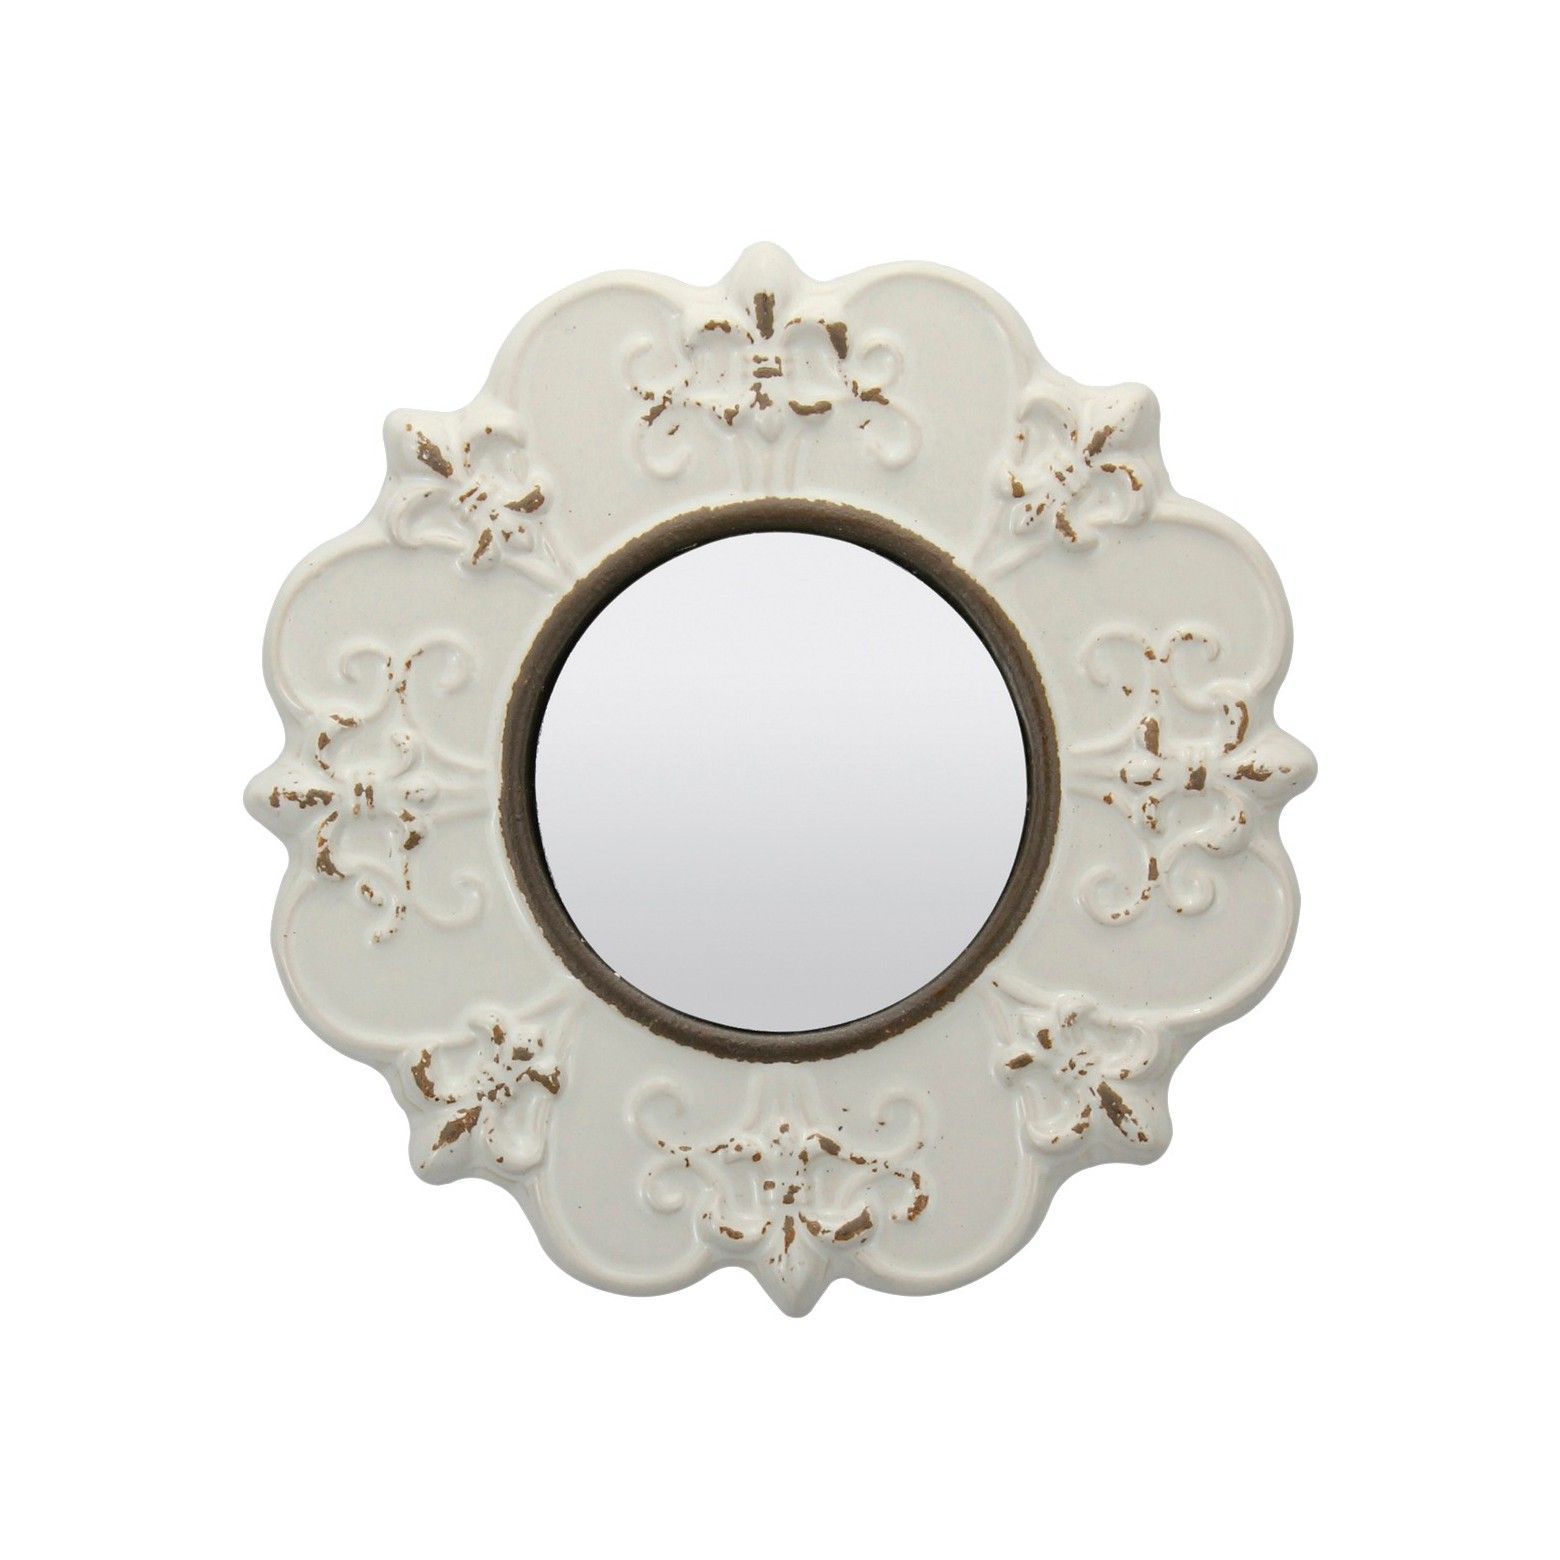 Round Decorative Wall Mirror Off White – Ckk Home Decor In Stitch White Round Wall Mirrors (View 9 of 15)